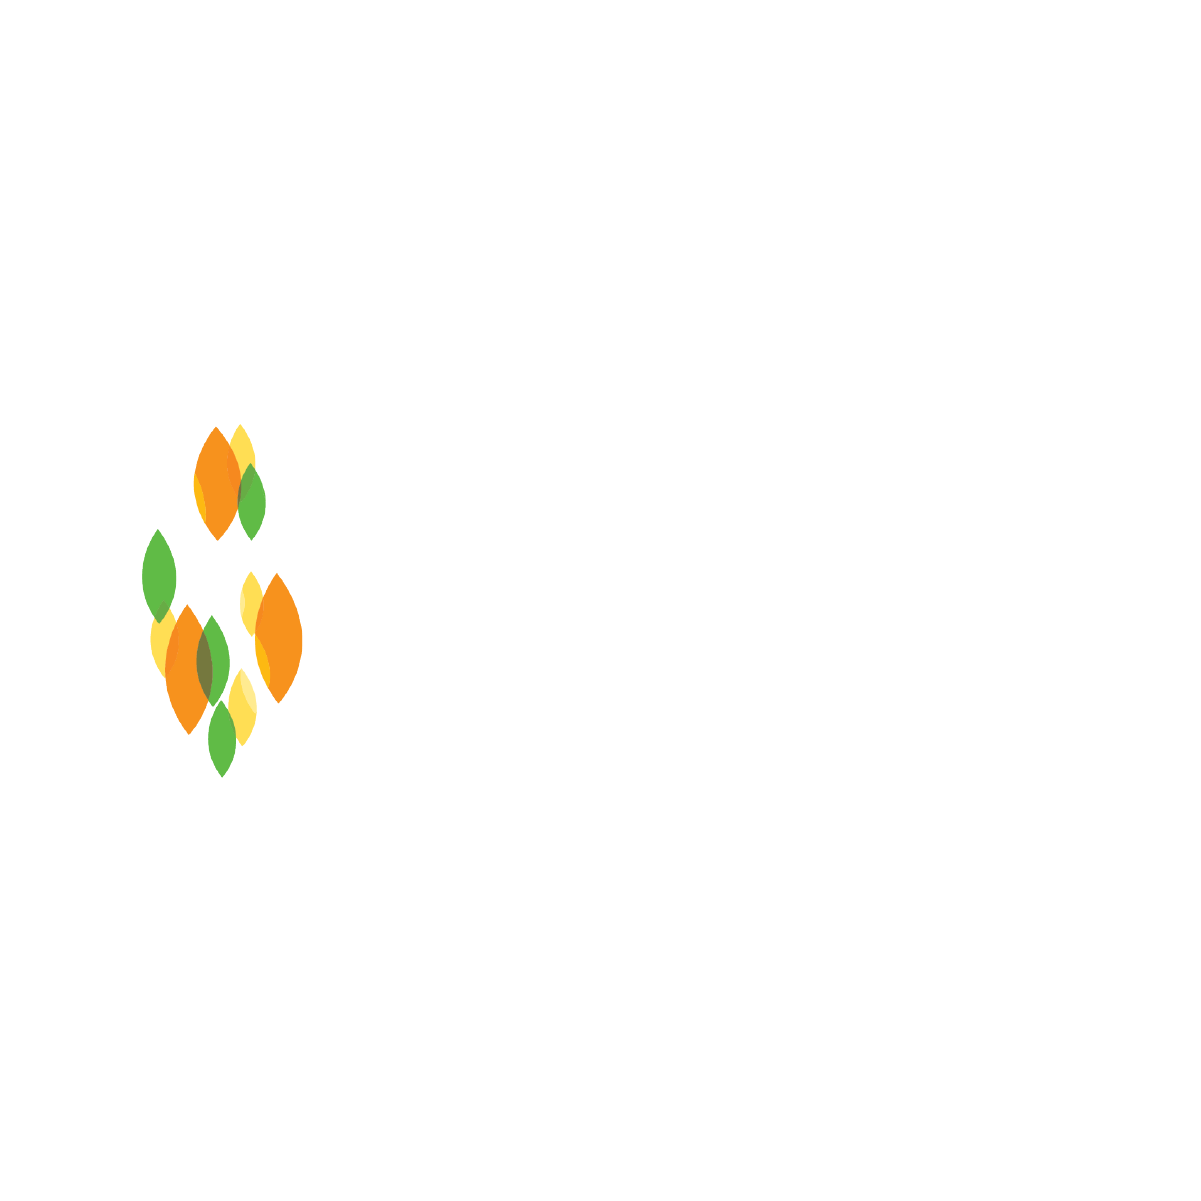 Graywood